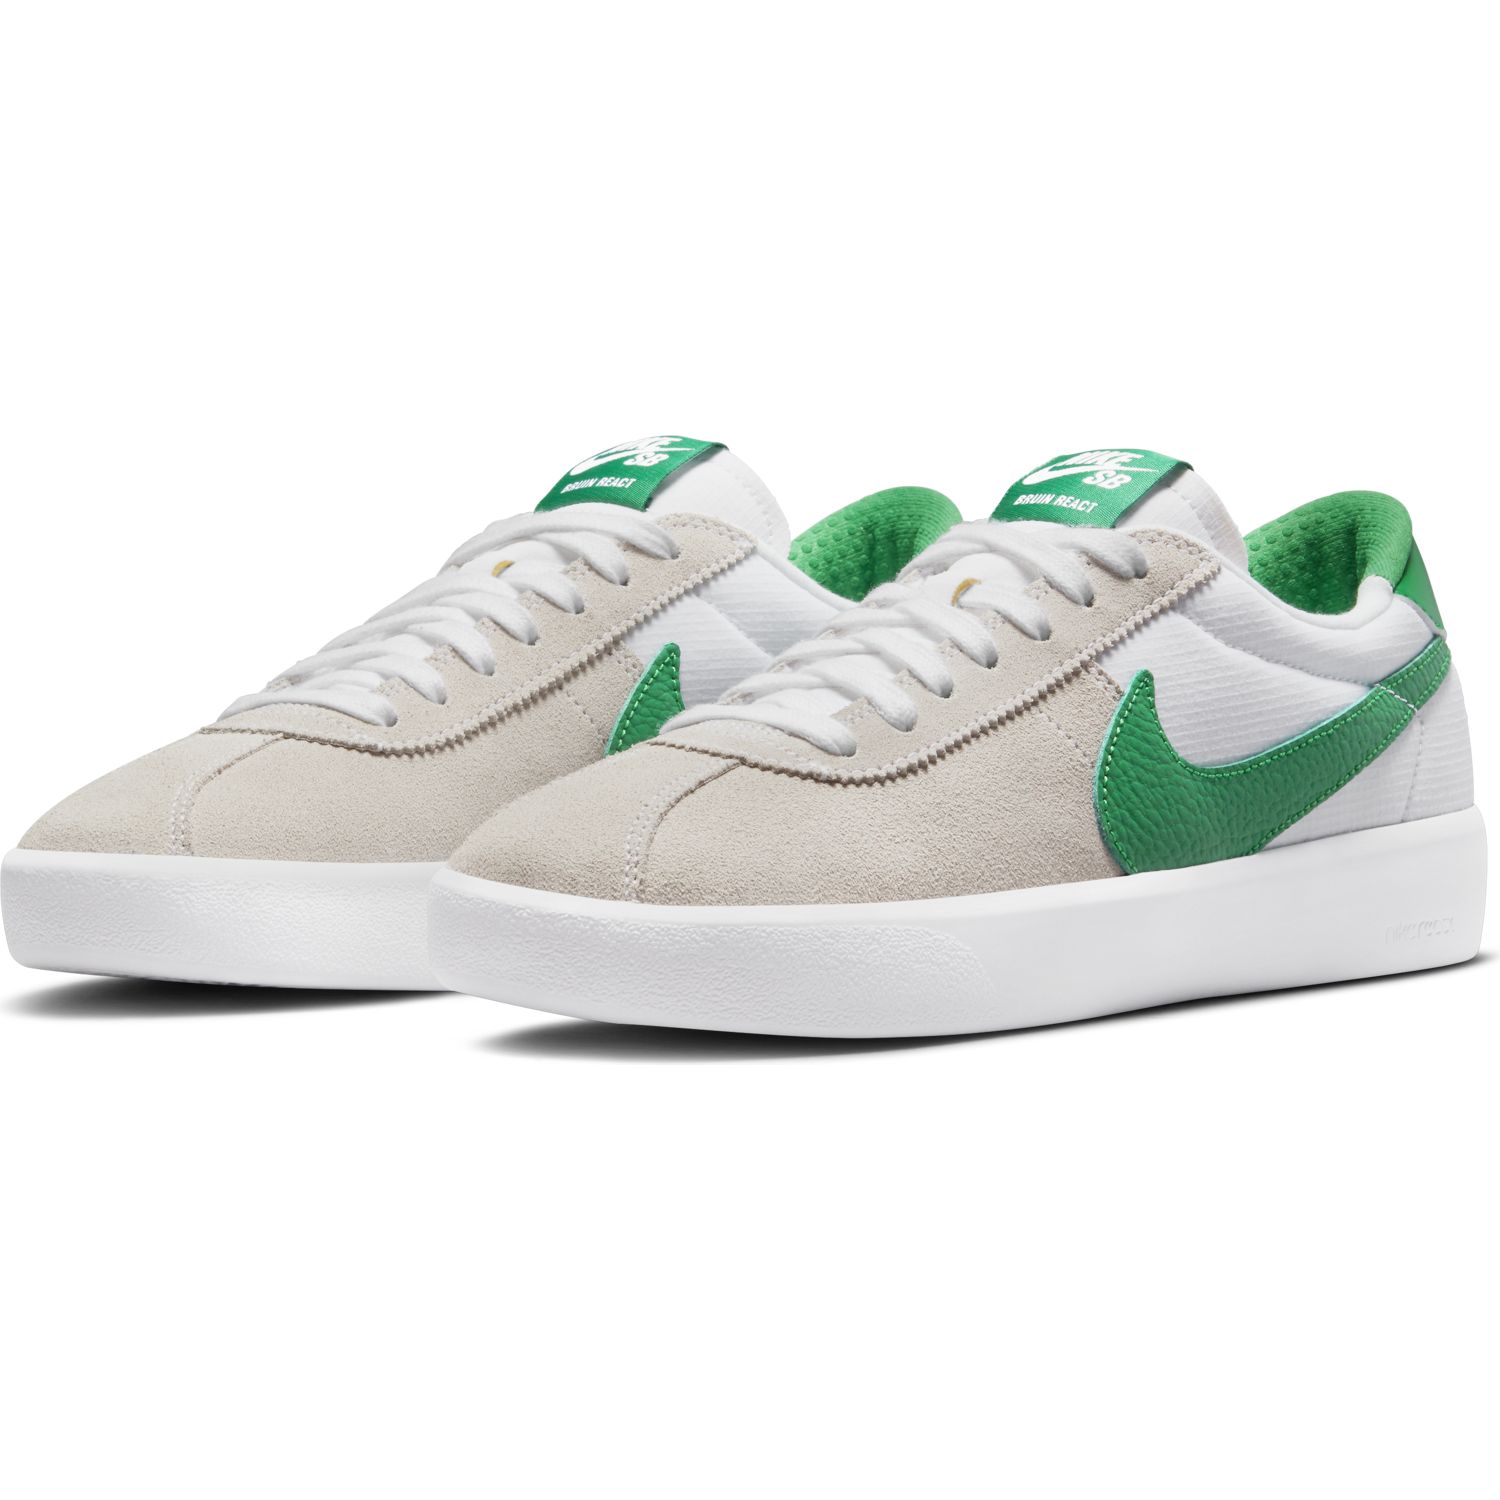 Nike SB Bruin React white green